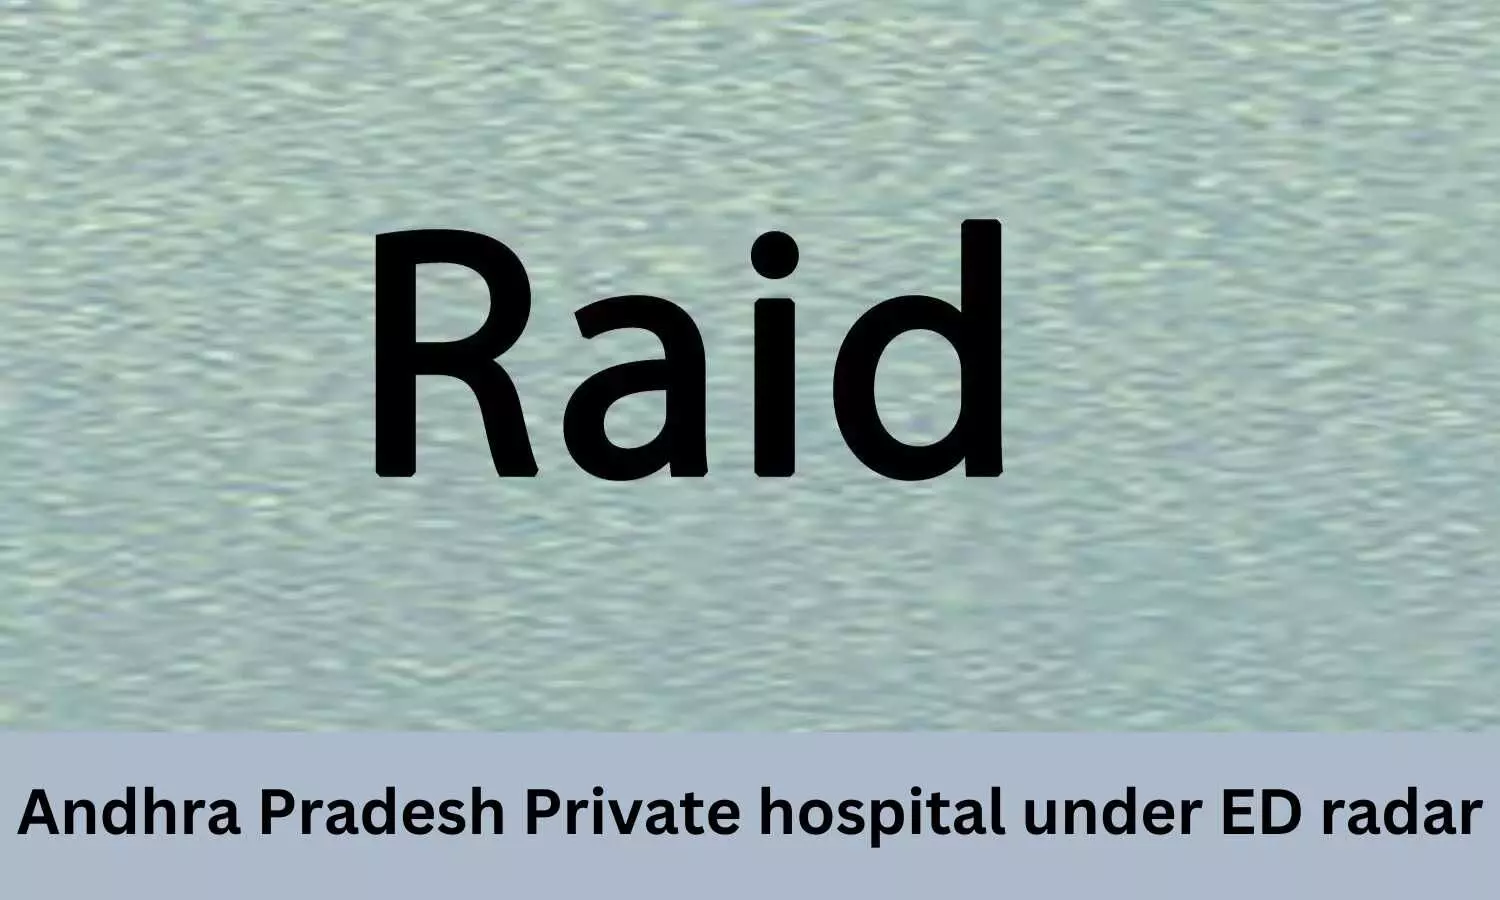 Andhra Pradesh Private hospital under ED radar: Irregularities worth crores of rupees found in Hospital records